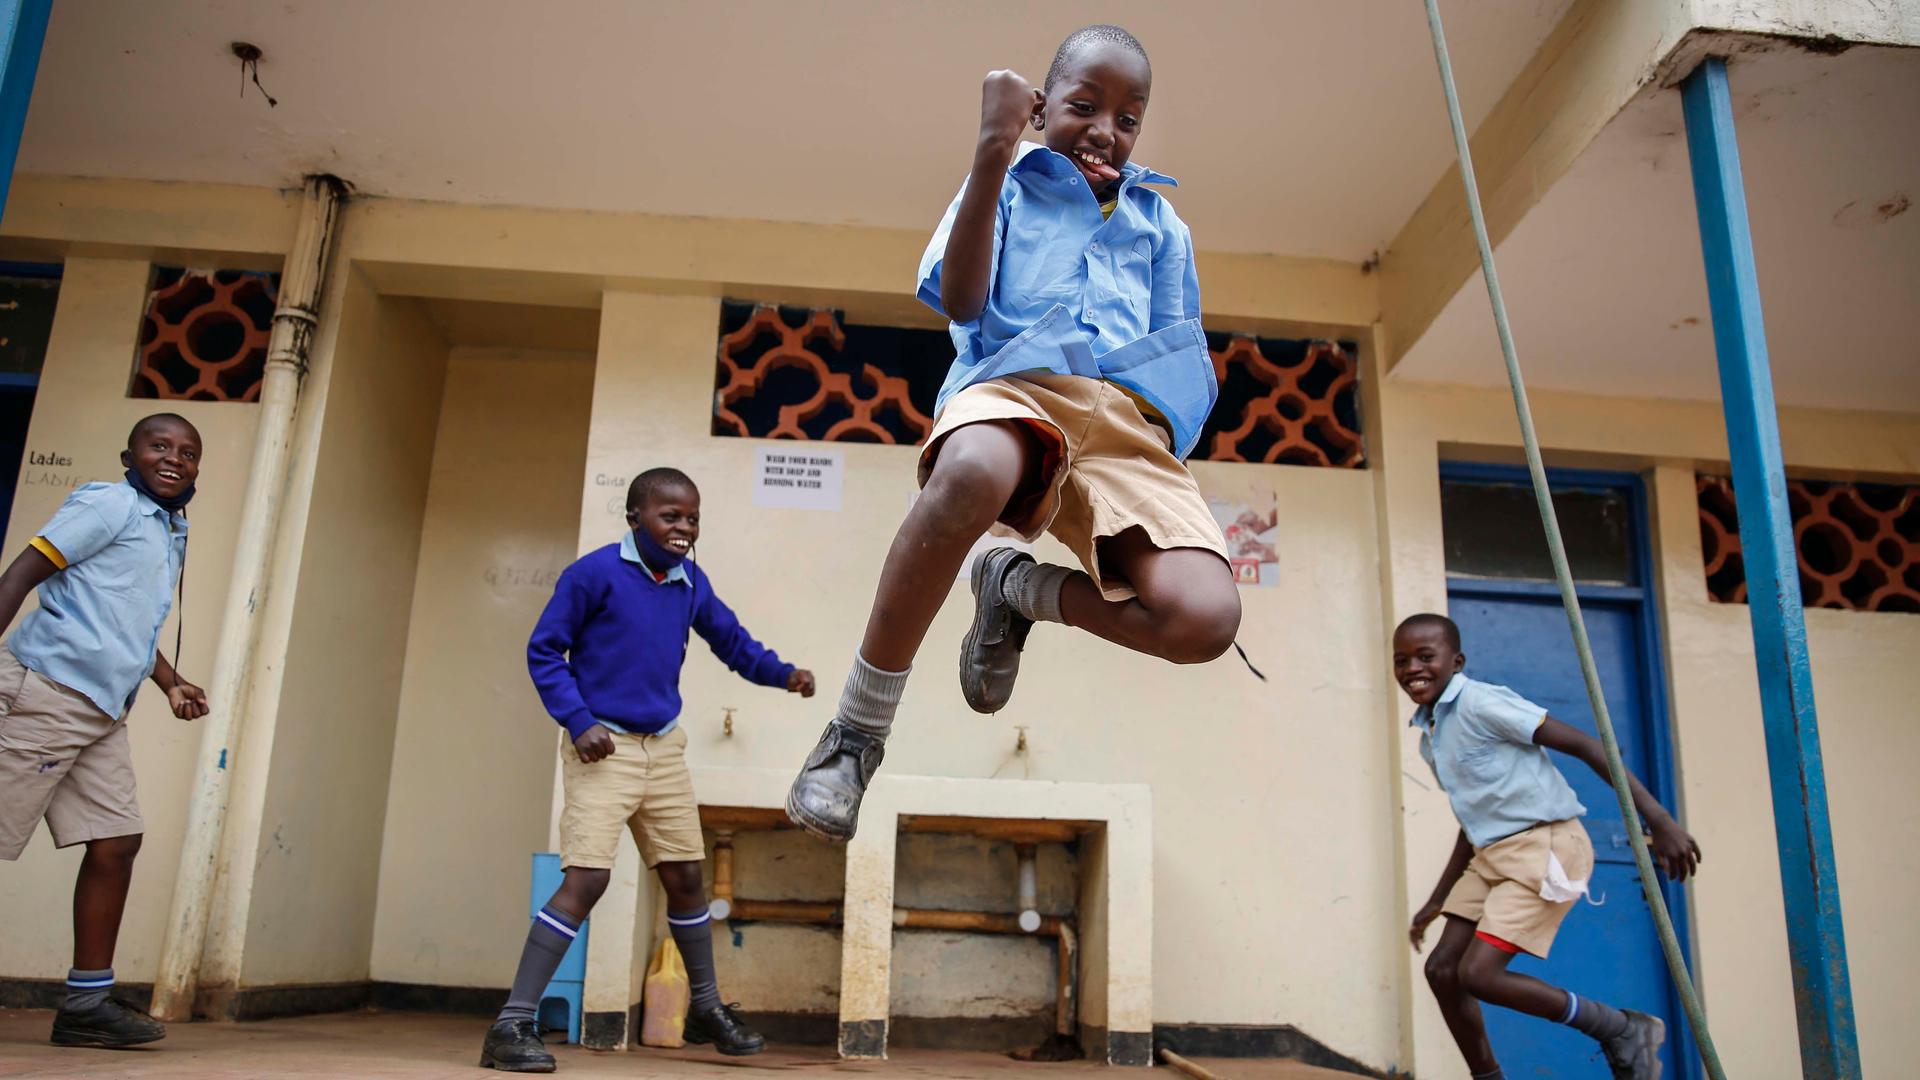 Schoolchildren joke around and play at the Olympic Primary School in Kibera, Kenya, on Oct. 12, 2020.